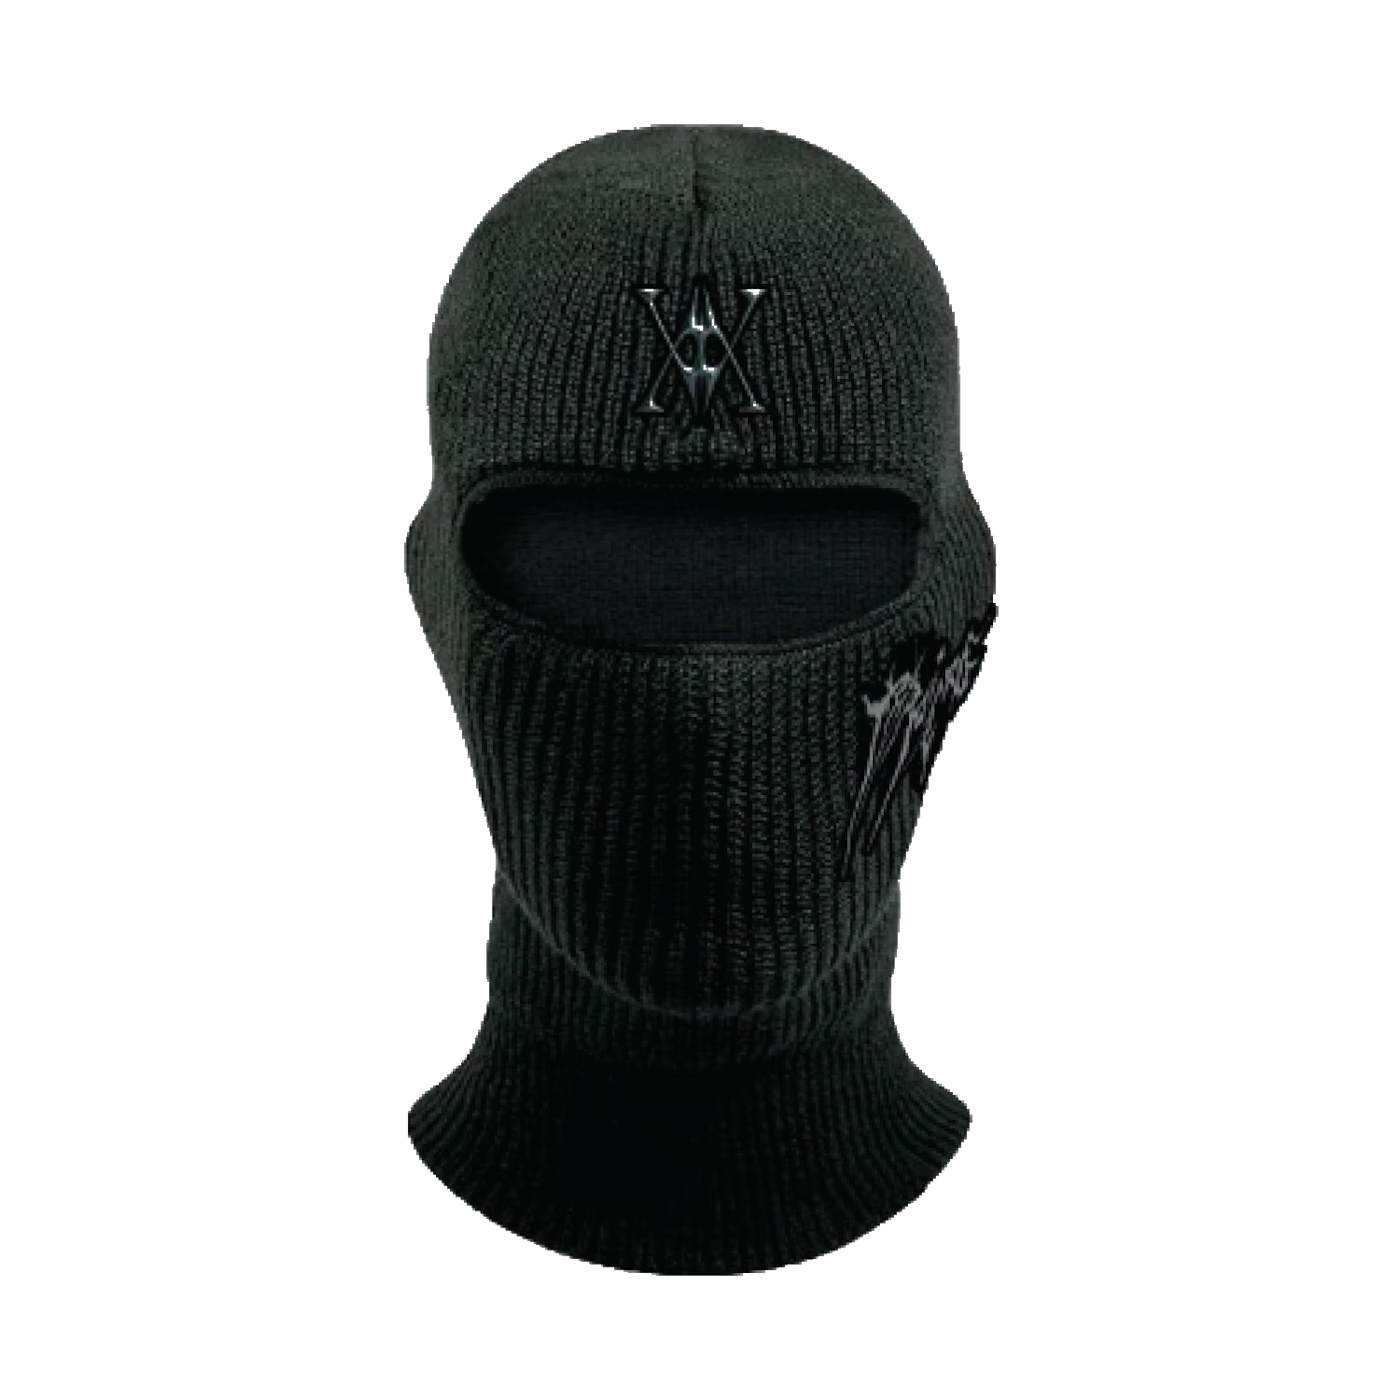 Black Vlone Embroidery 3 Holes Ski Mask - Black